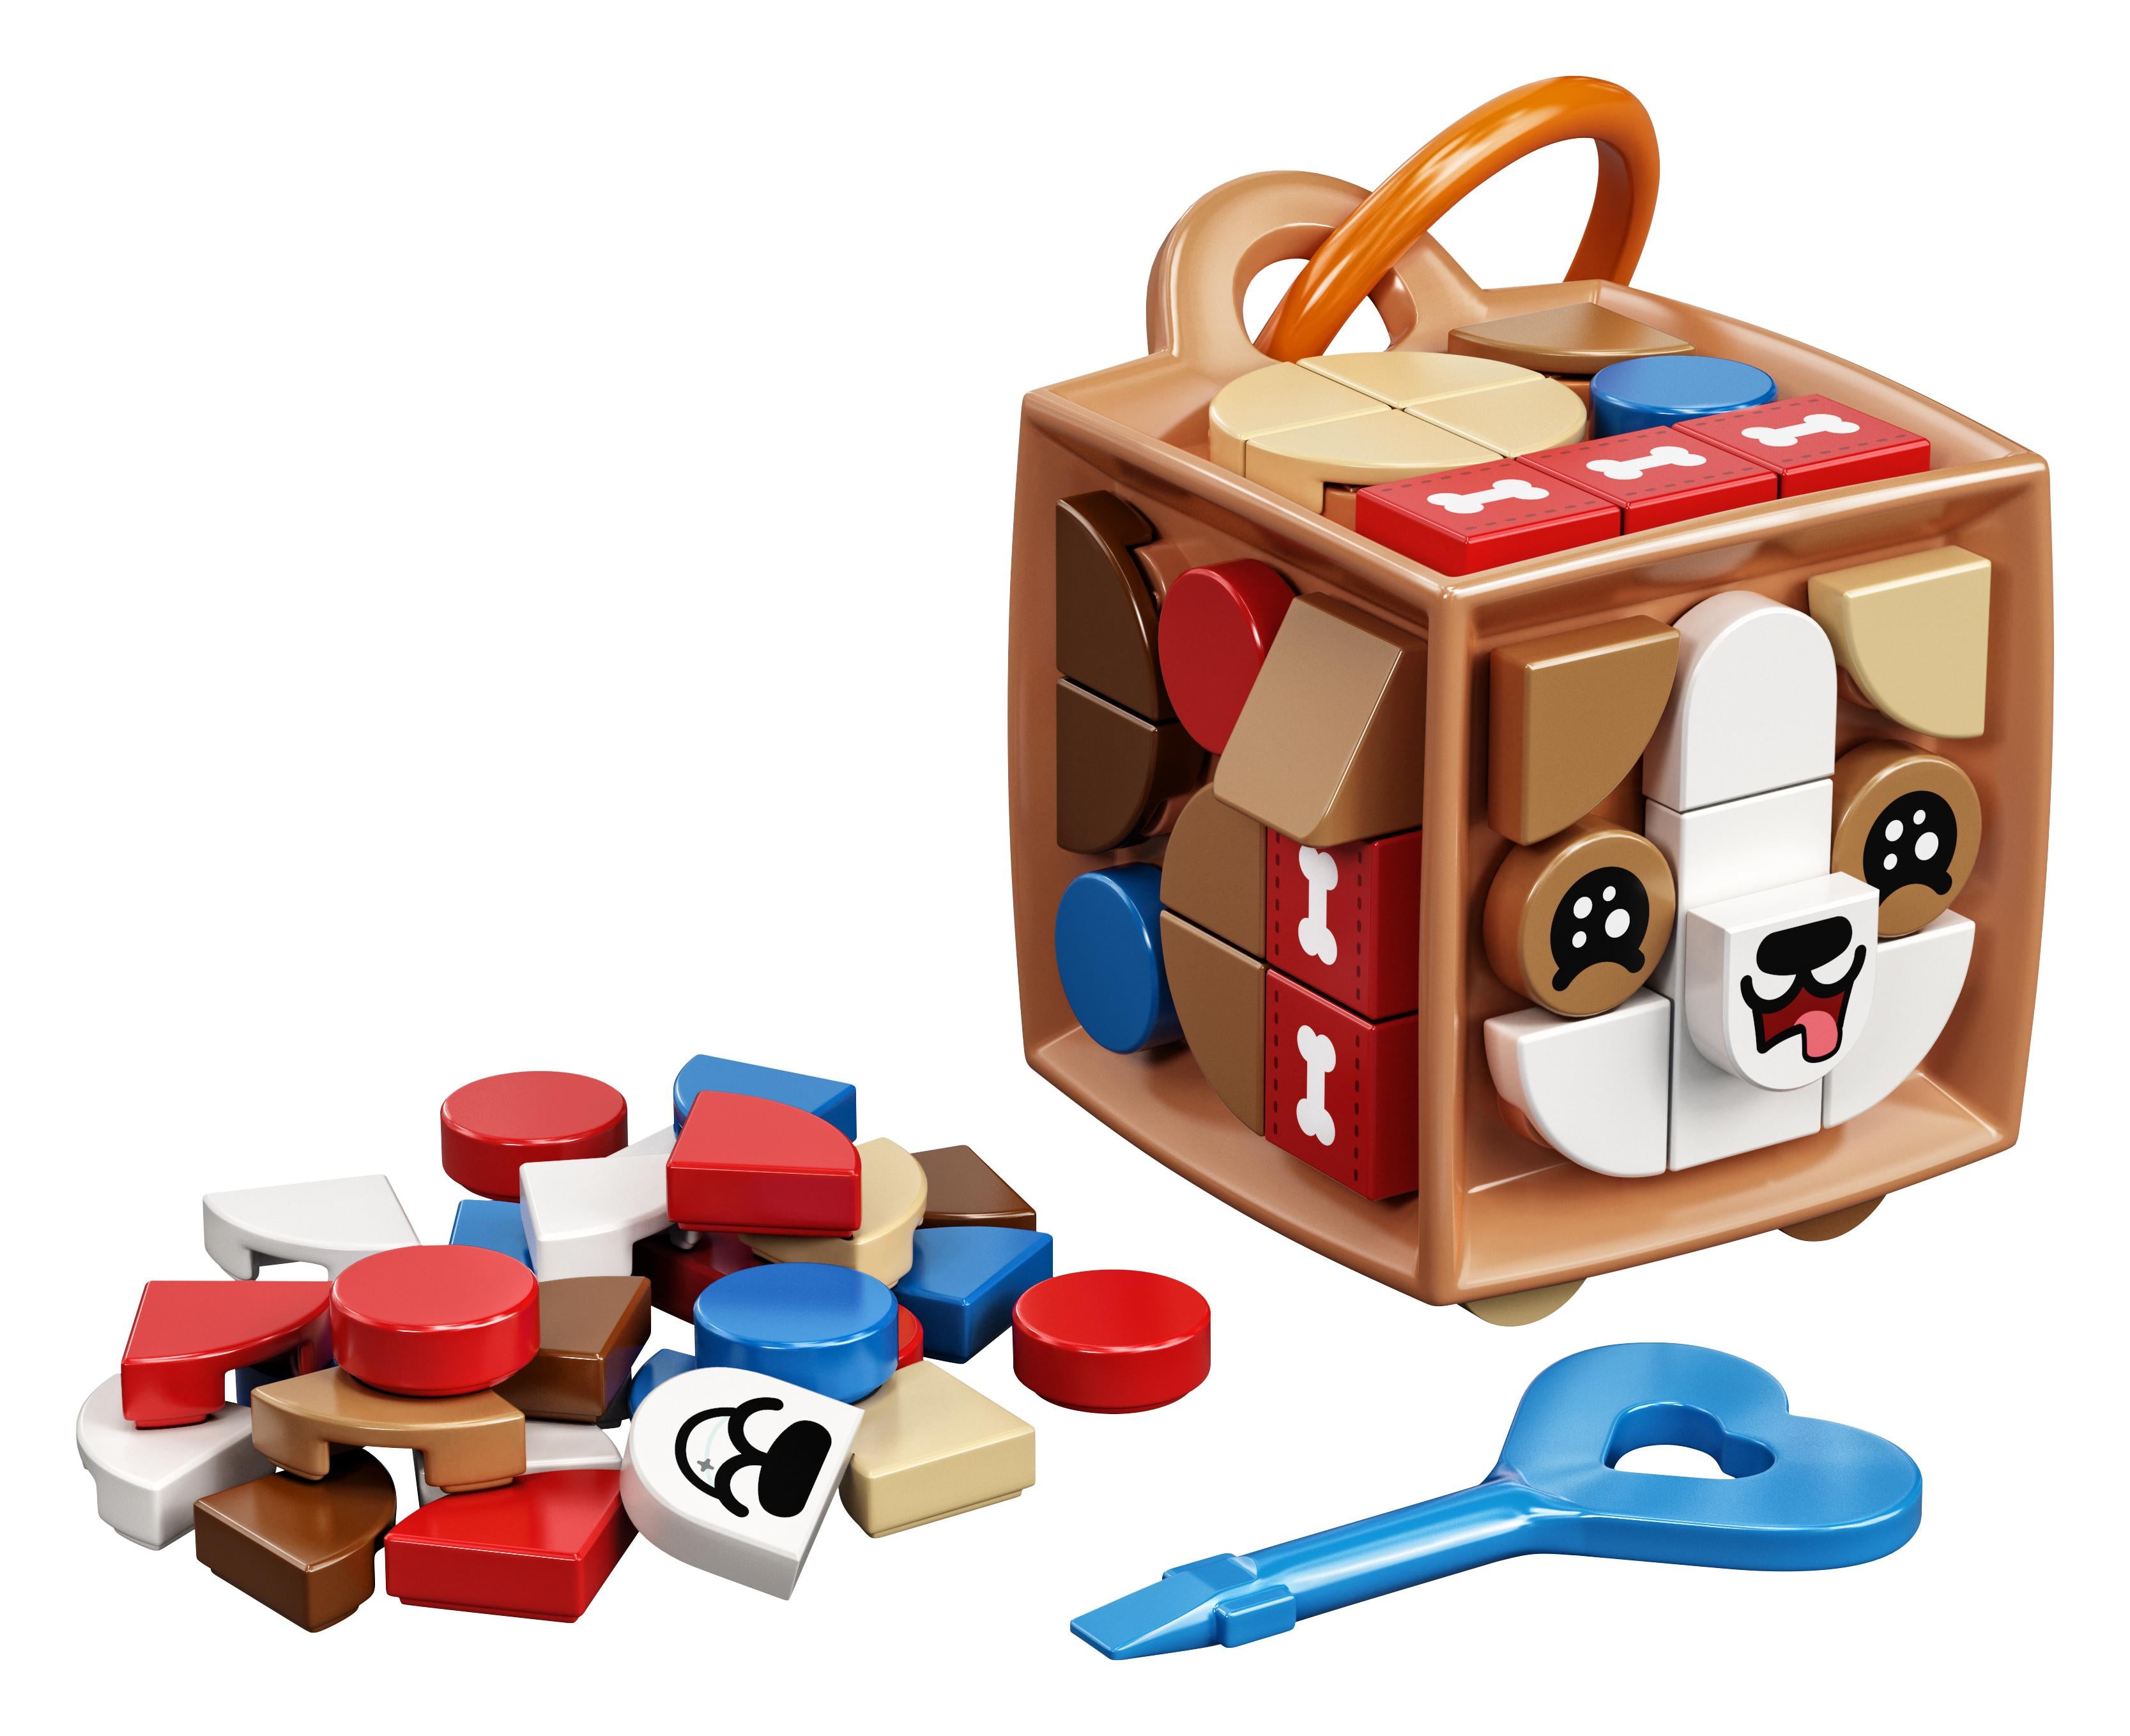 LEGO® DOTS Bag Tag Dog Accessories Craft Set 41927 Default Title